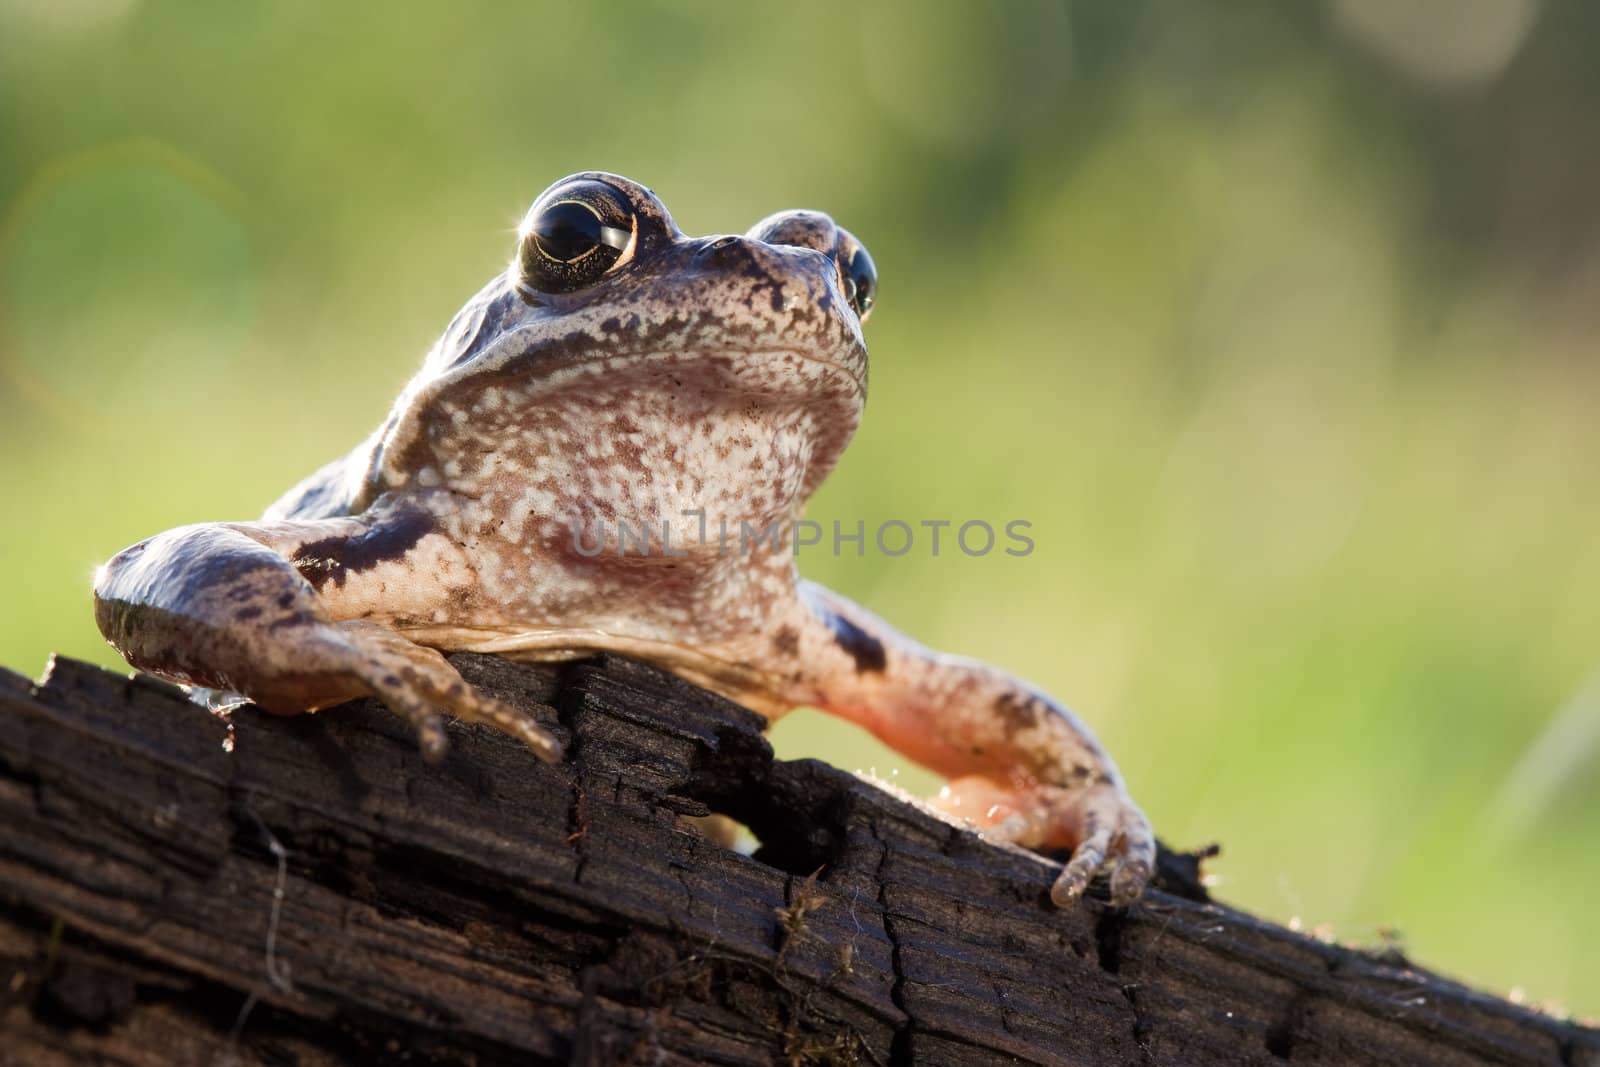 Mr. Frog by Lincikas